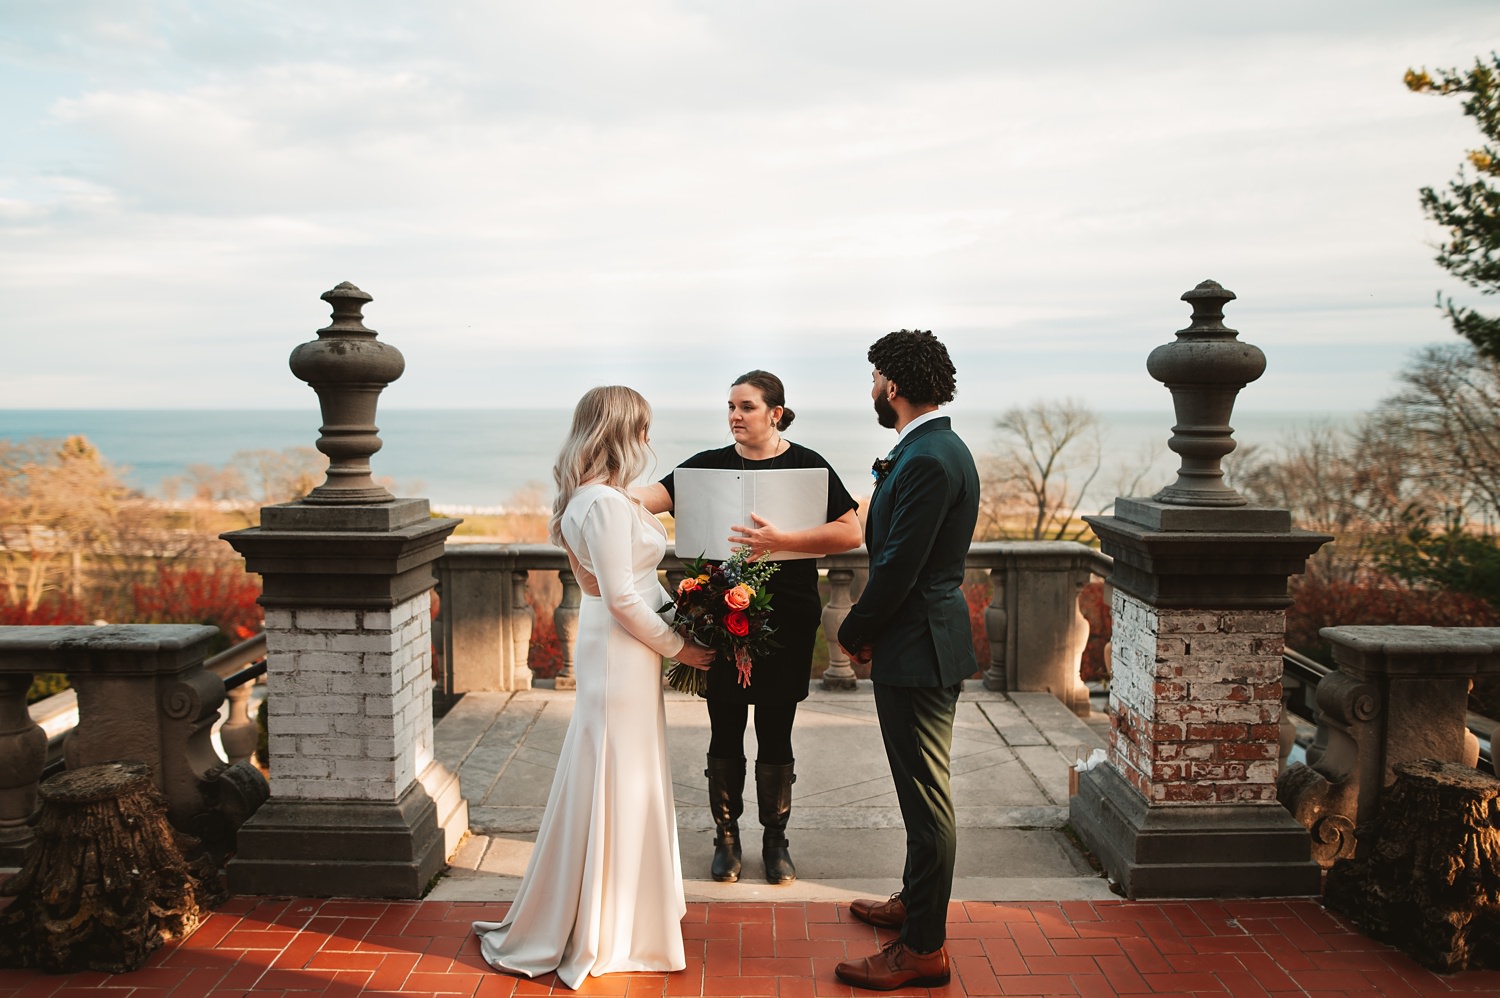 Villa Terrace Milwaukee Wedding Photography - wedding ceremony romantic, micro wedding